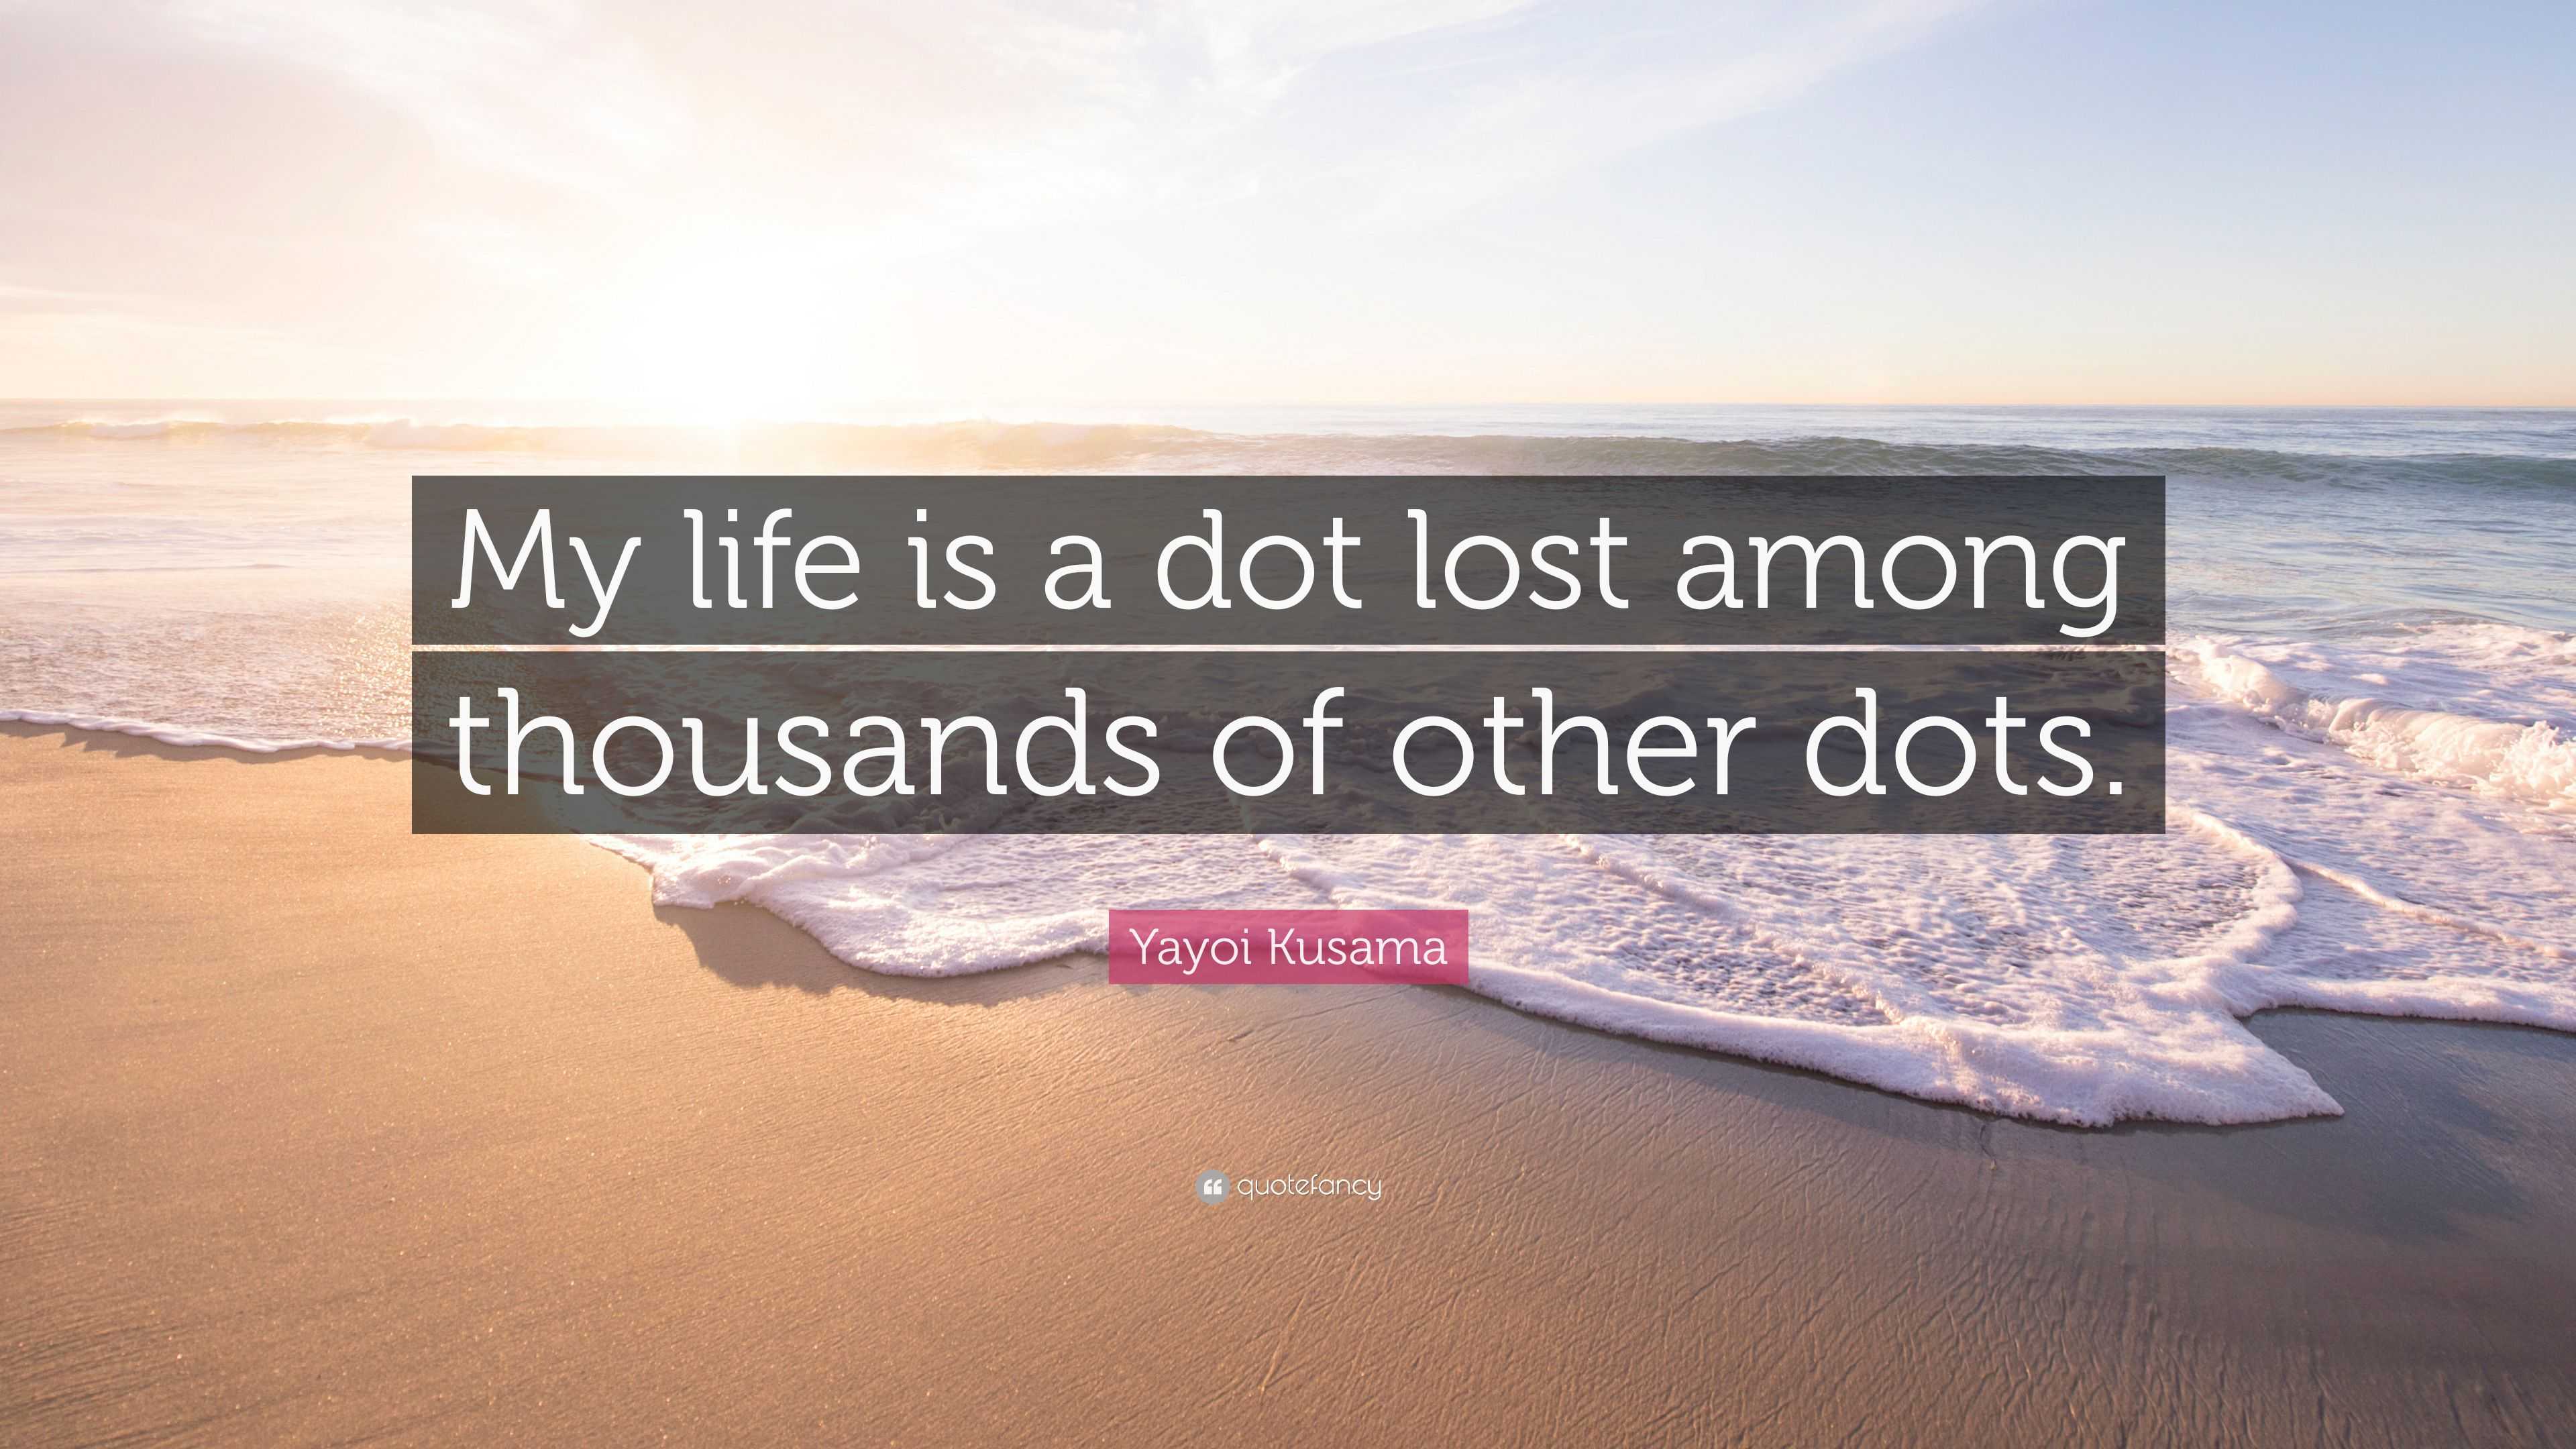 Yayoi Kusama Quote: "My life is a dot lost among thousands ...